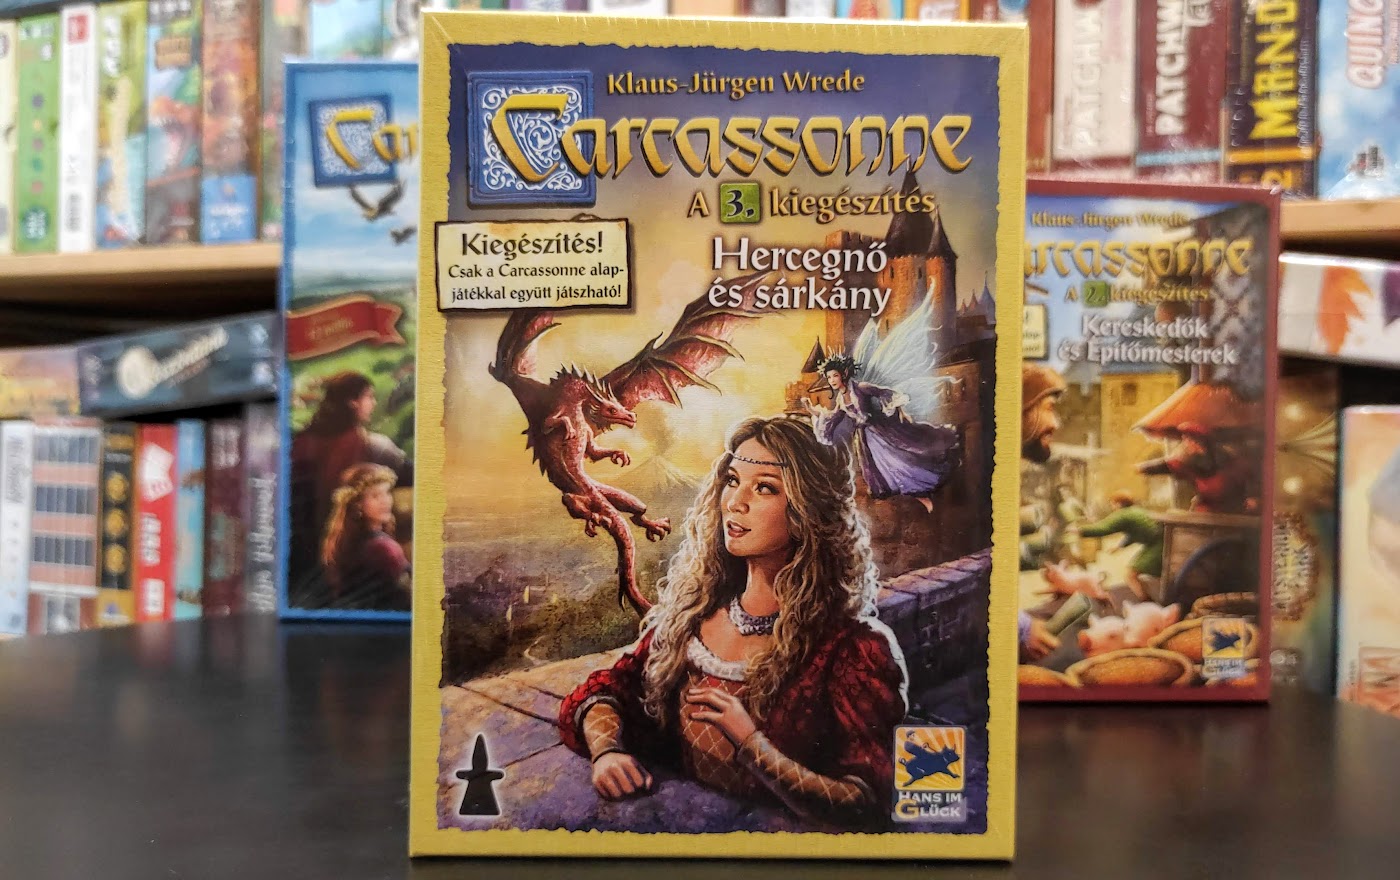  Carcassonne: Expansion 3 – The Princess & The Dragon (2005), Carcassonne 3. kiegészítő - A Hercegnő és a sárkány kiegészítés a Carcassonne társasjátékhoz